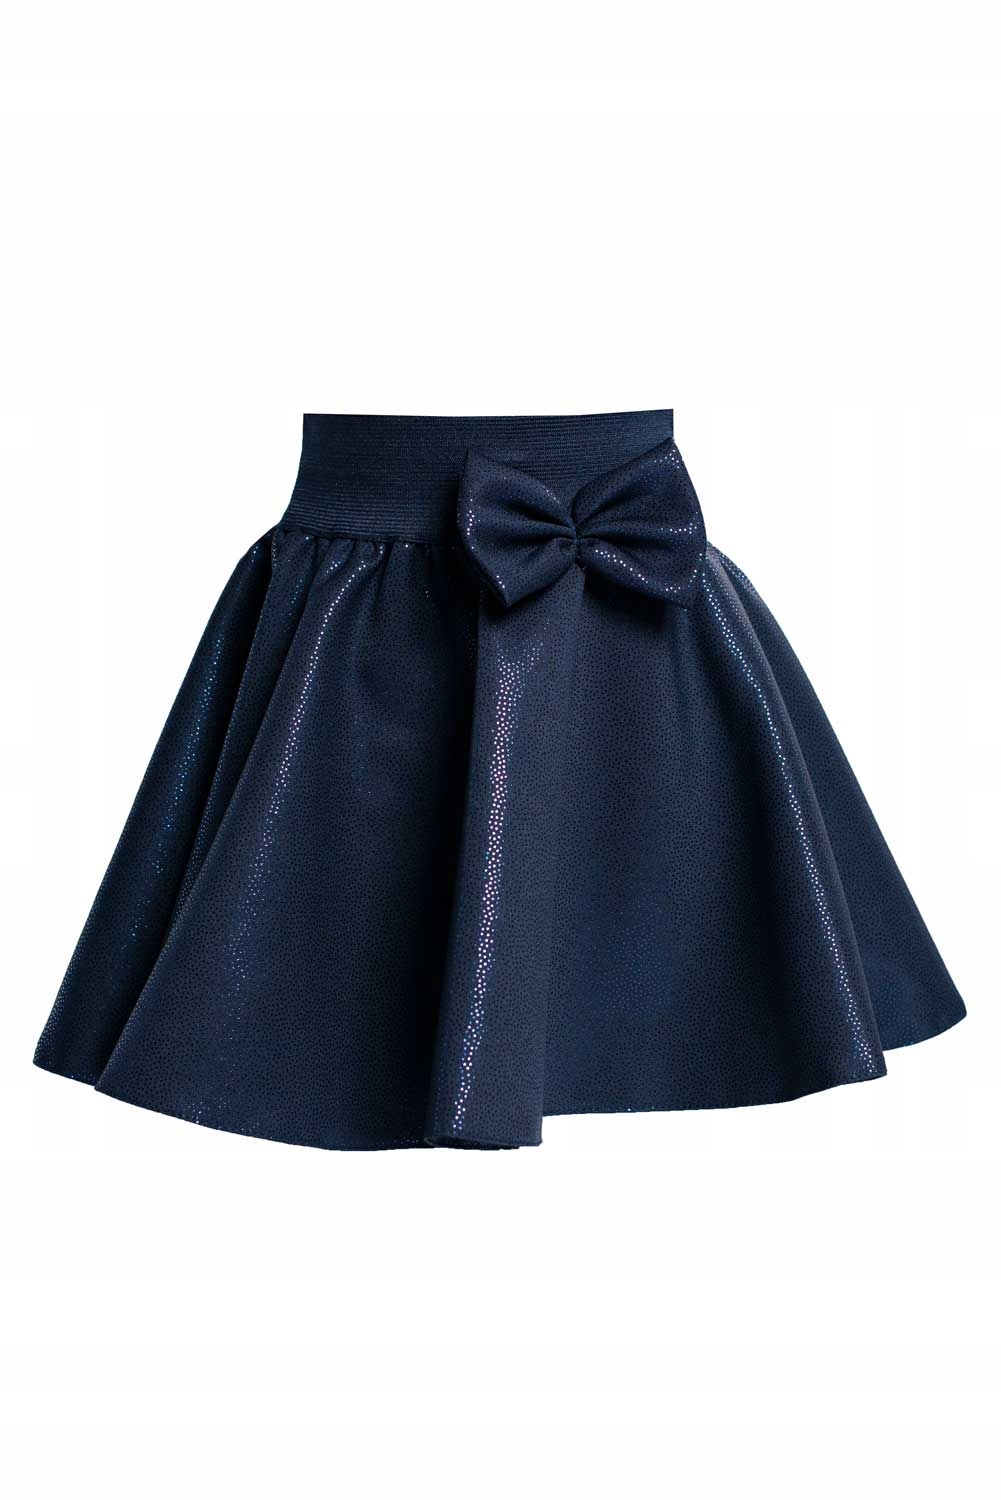 Темно-синяя юбка для девочки Flash 134